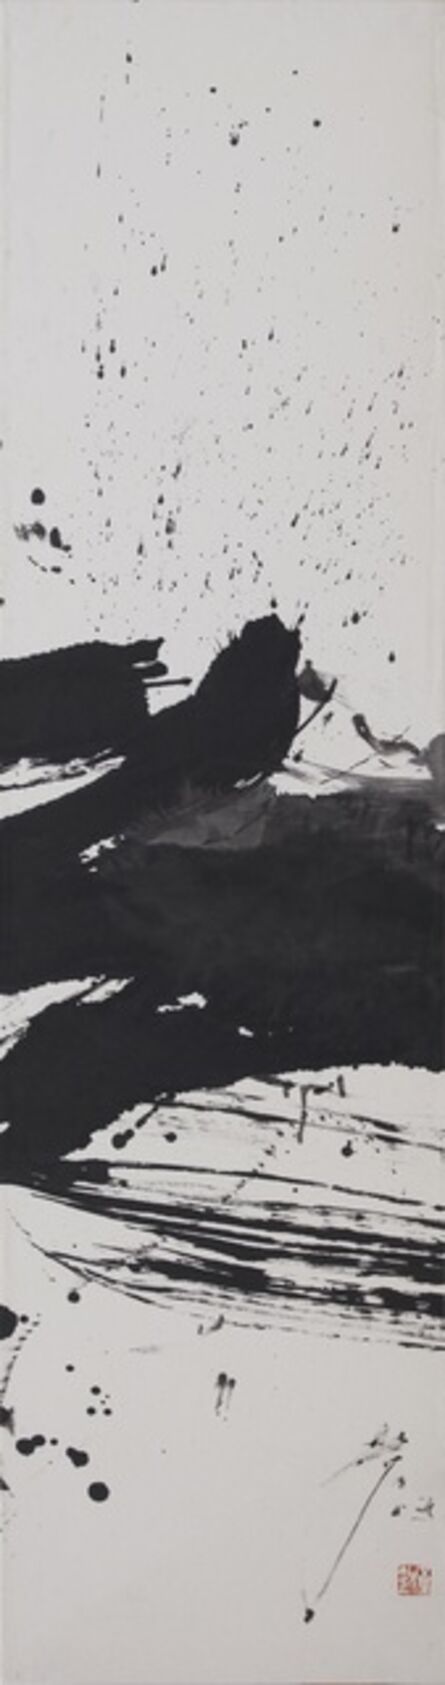 Huang Rui 黄锐, ‘Untitled’, 1985